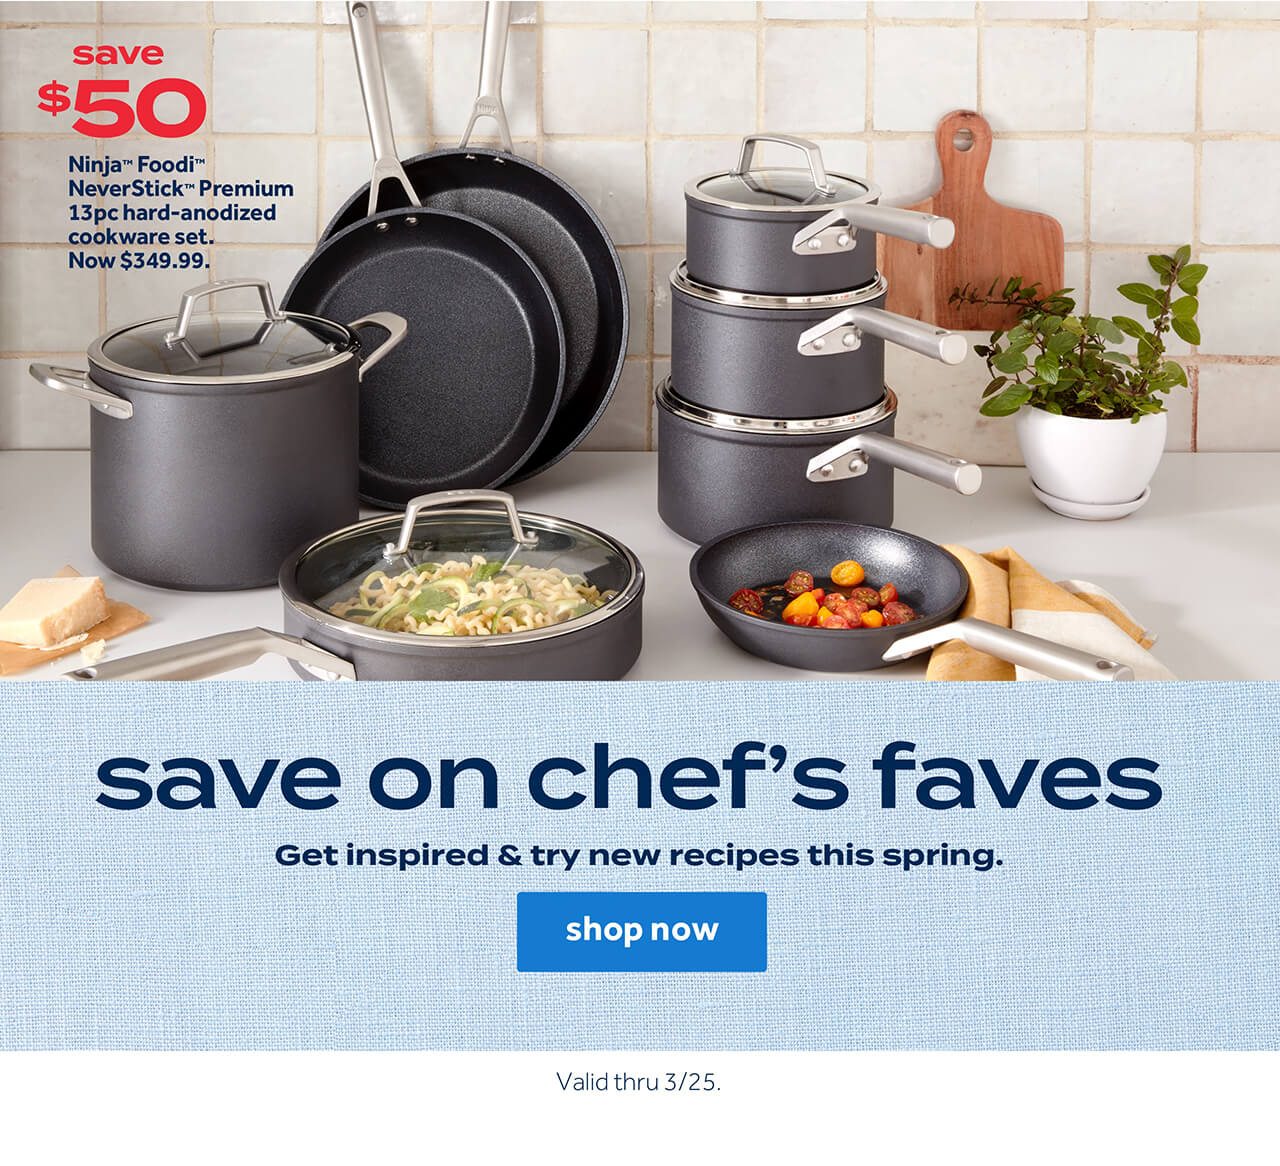 save $50 | Ninja Foodi NerverStick Premium 13pc hard-anodized cookware set | Now $349.99